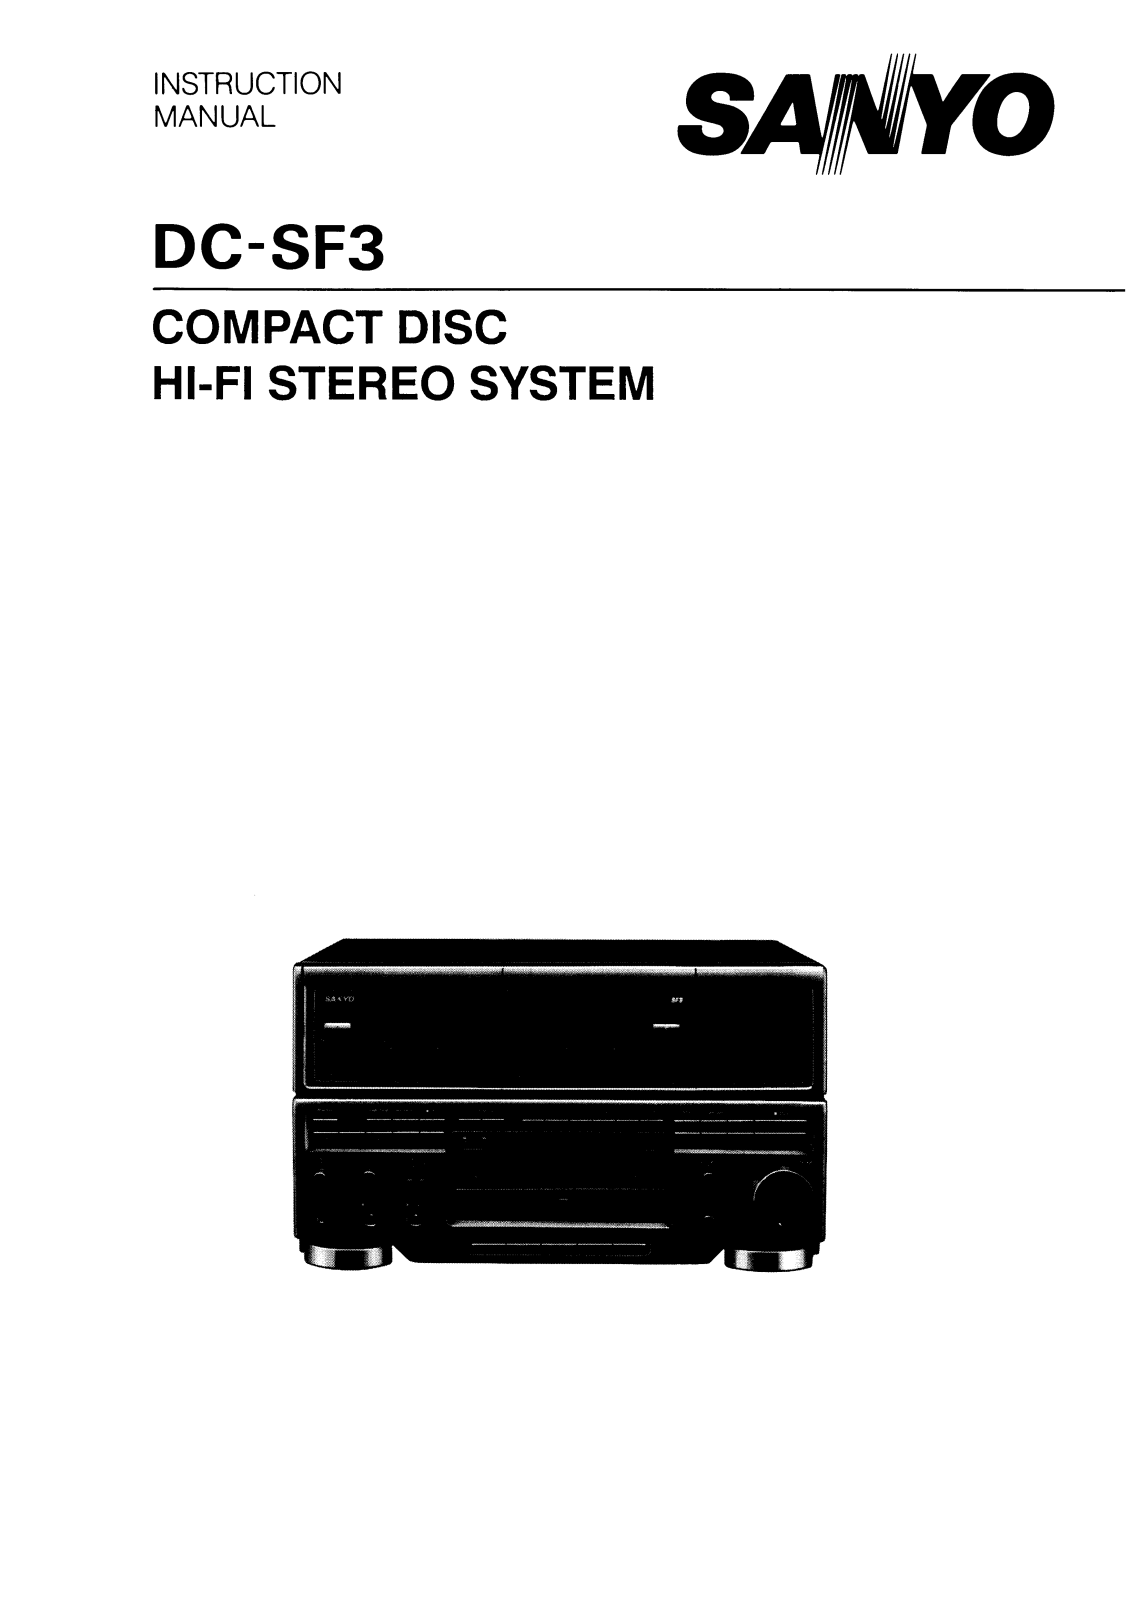 Sanyo DC-SF3 Instruction Manual